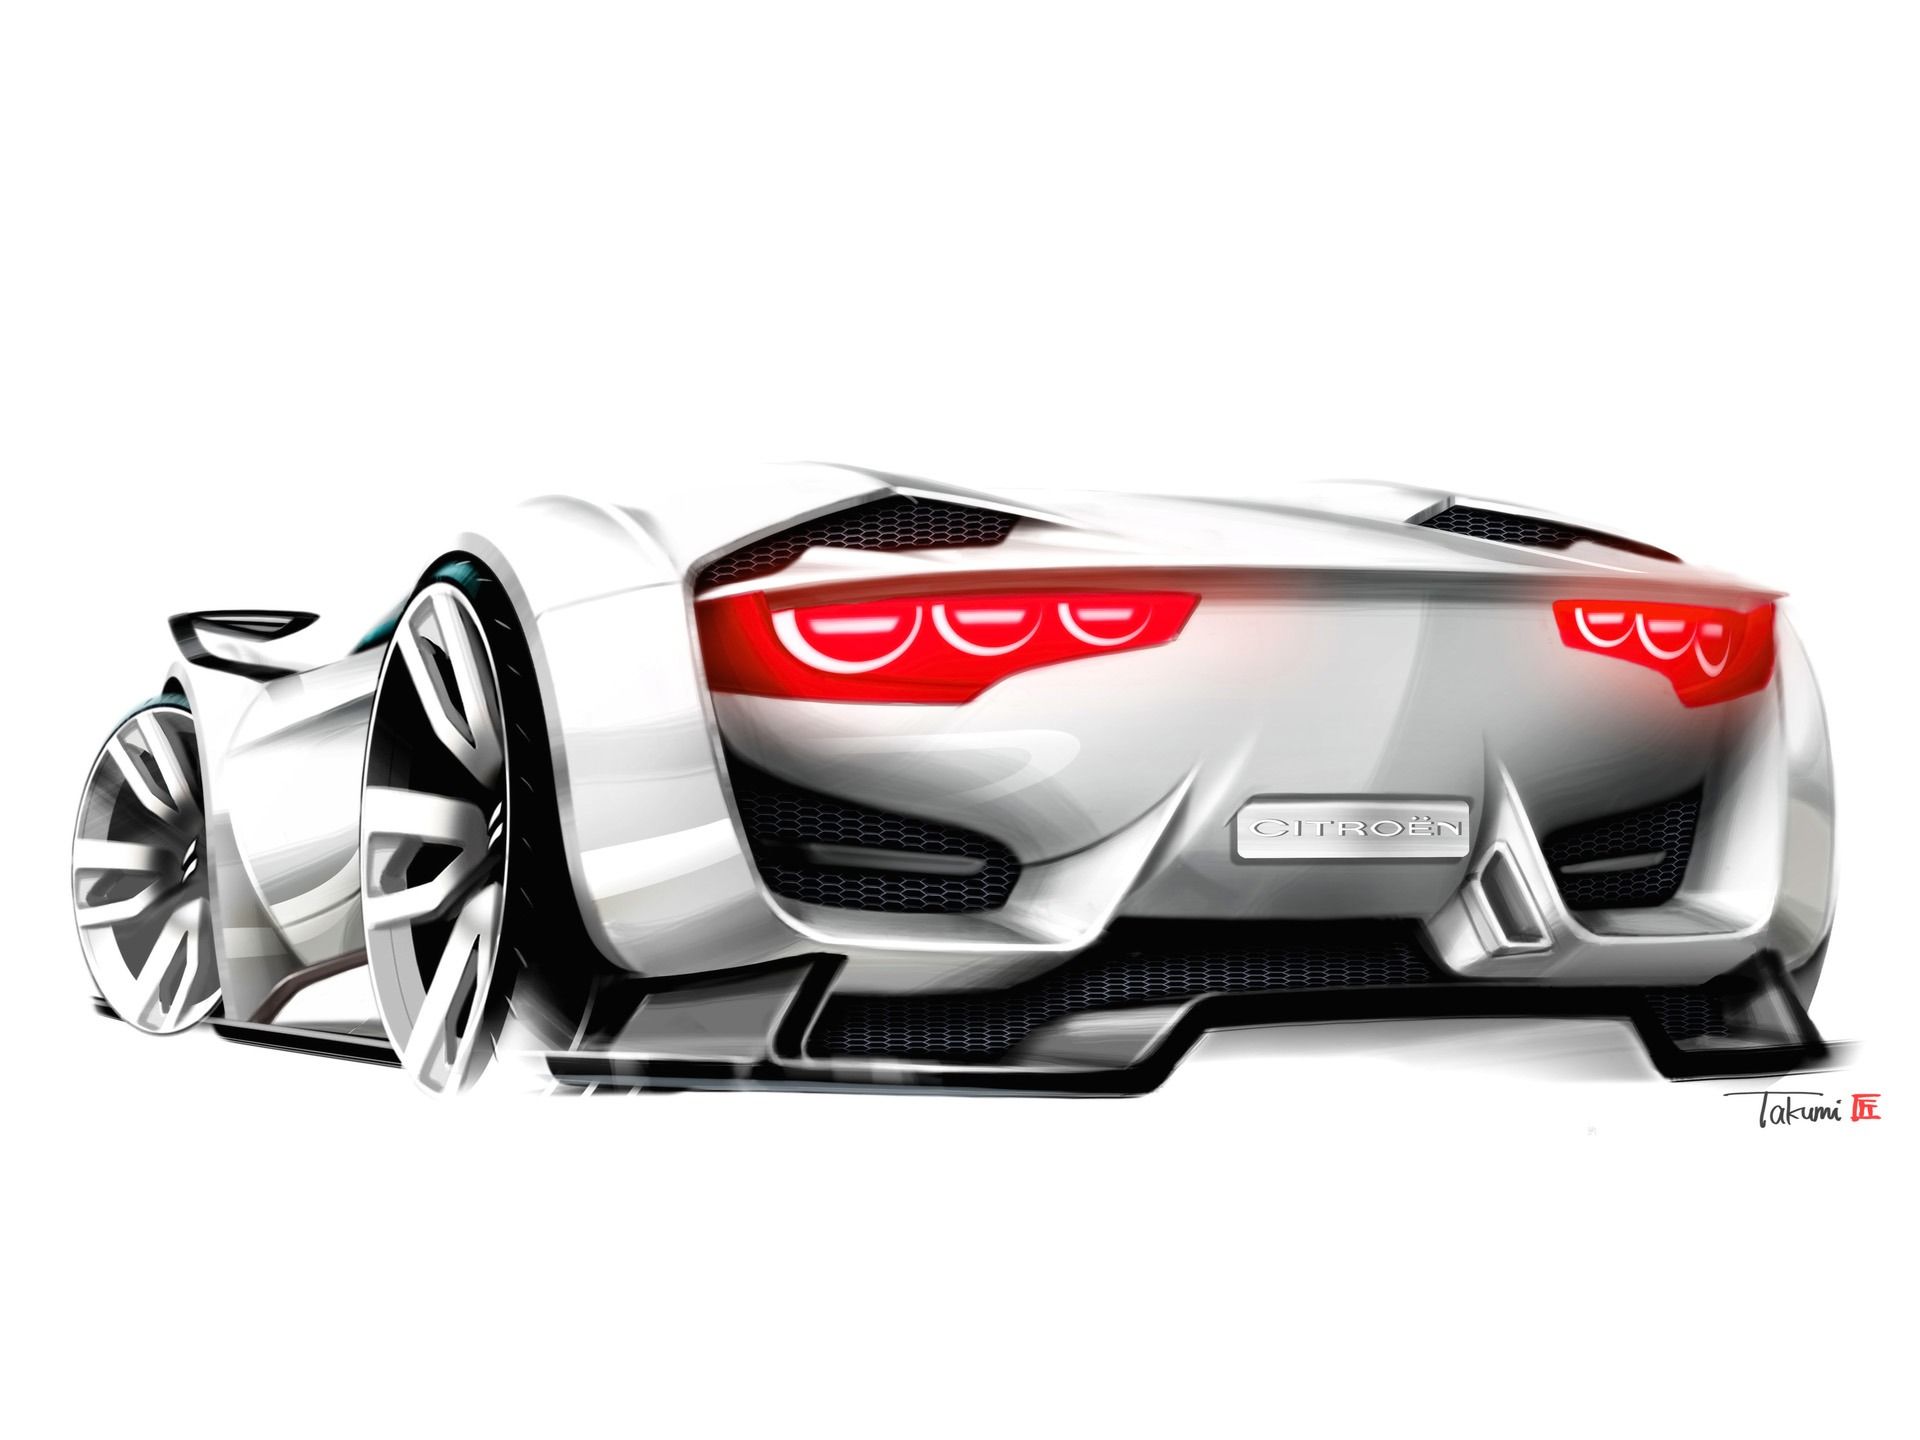 GTbyCitroen Concept Wallpaper Concept Cars Wallpaper in jpg format for free download